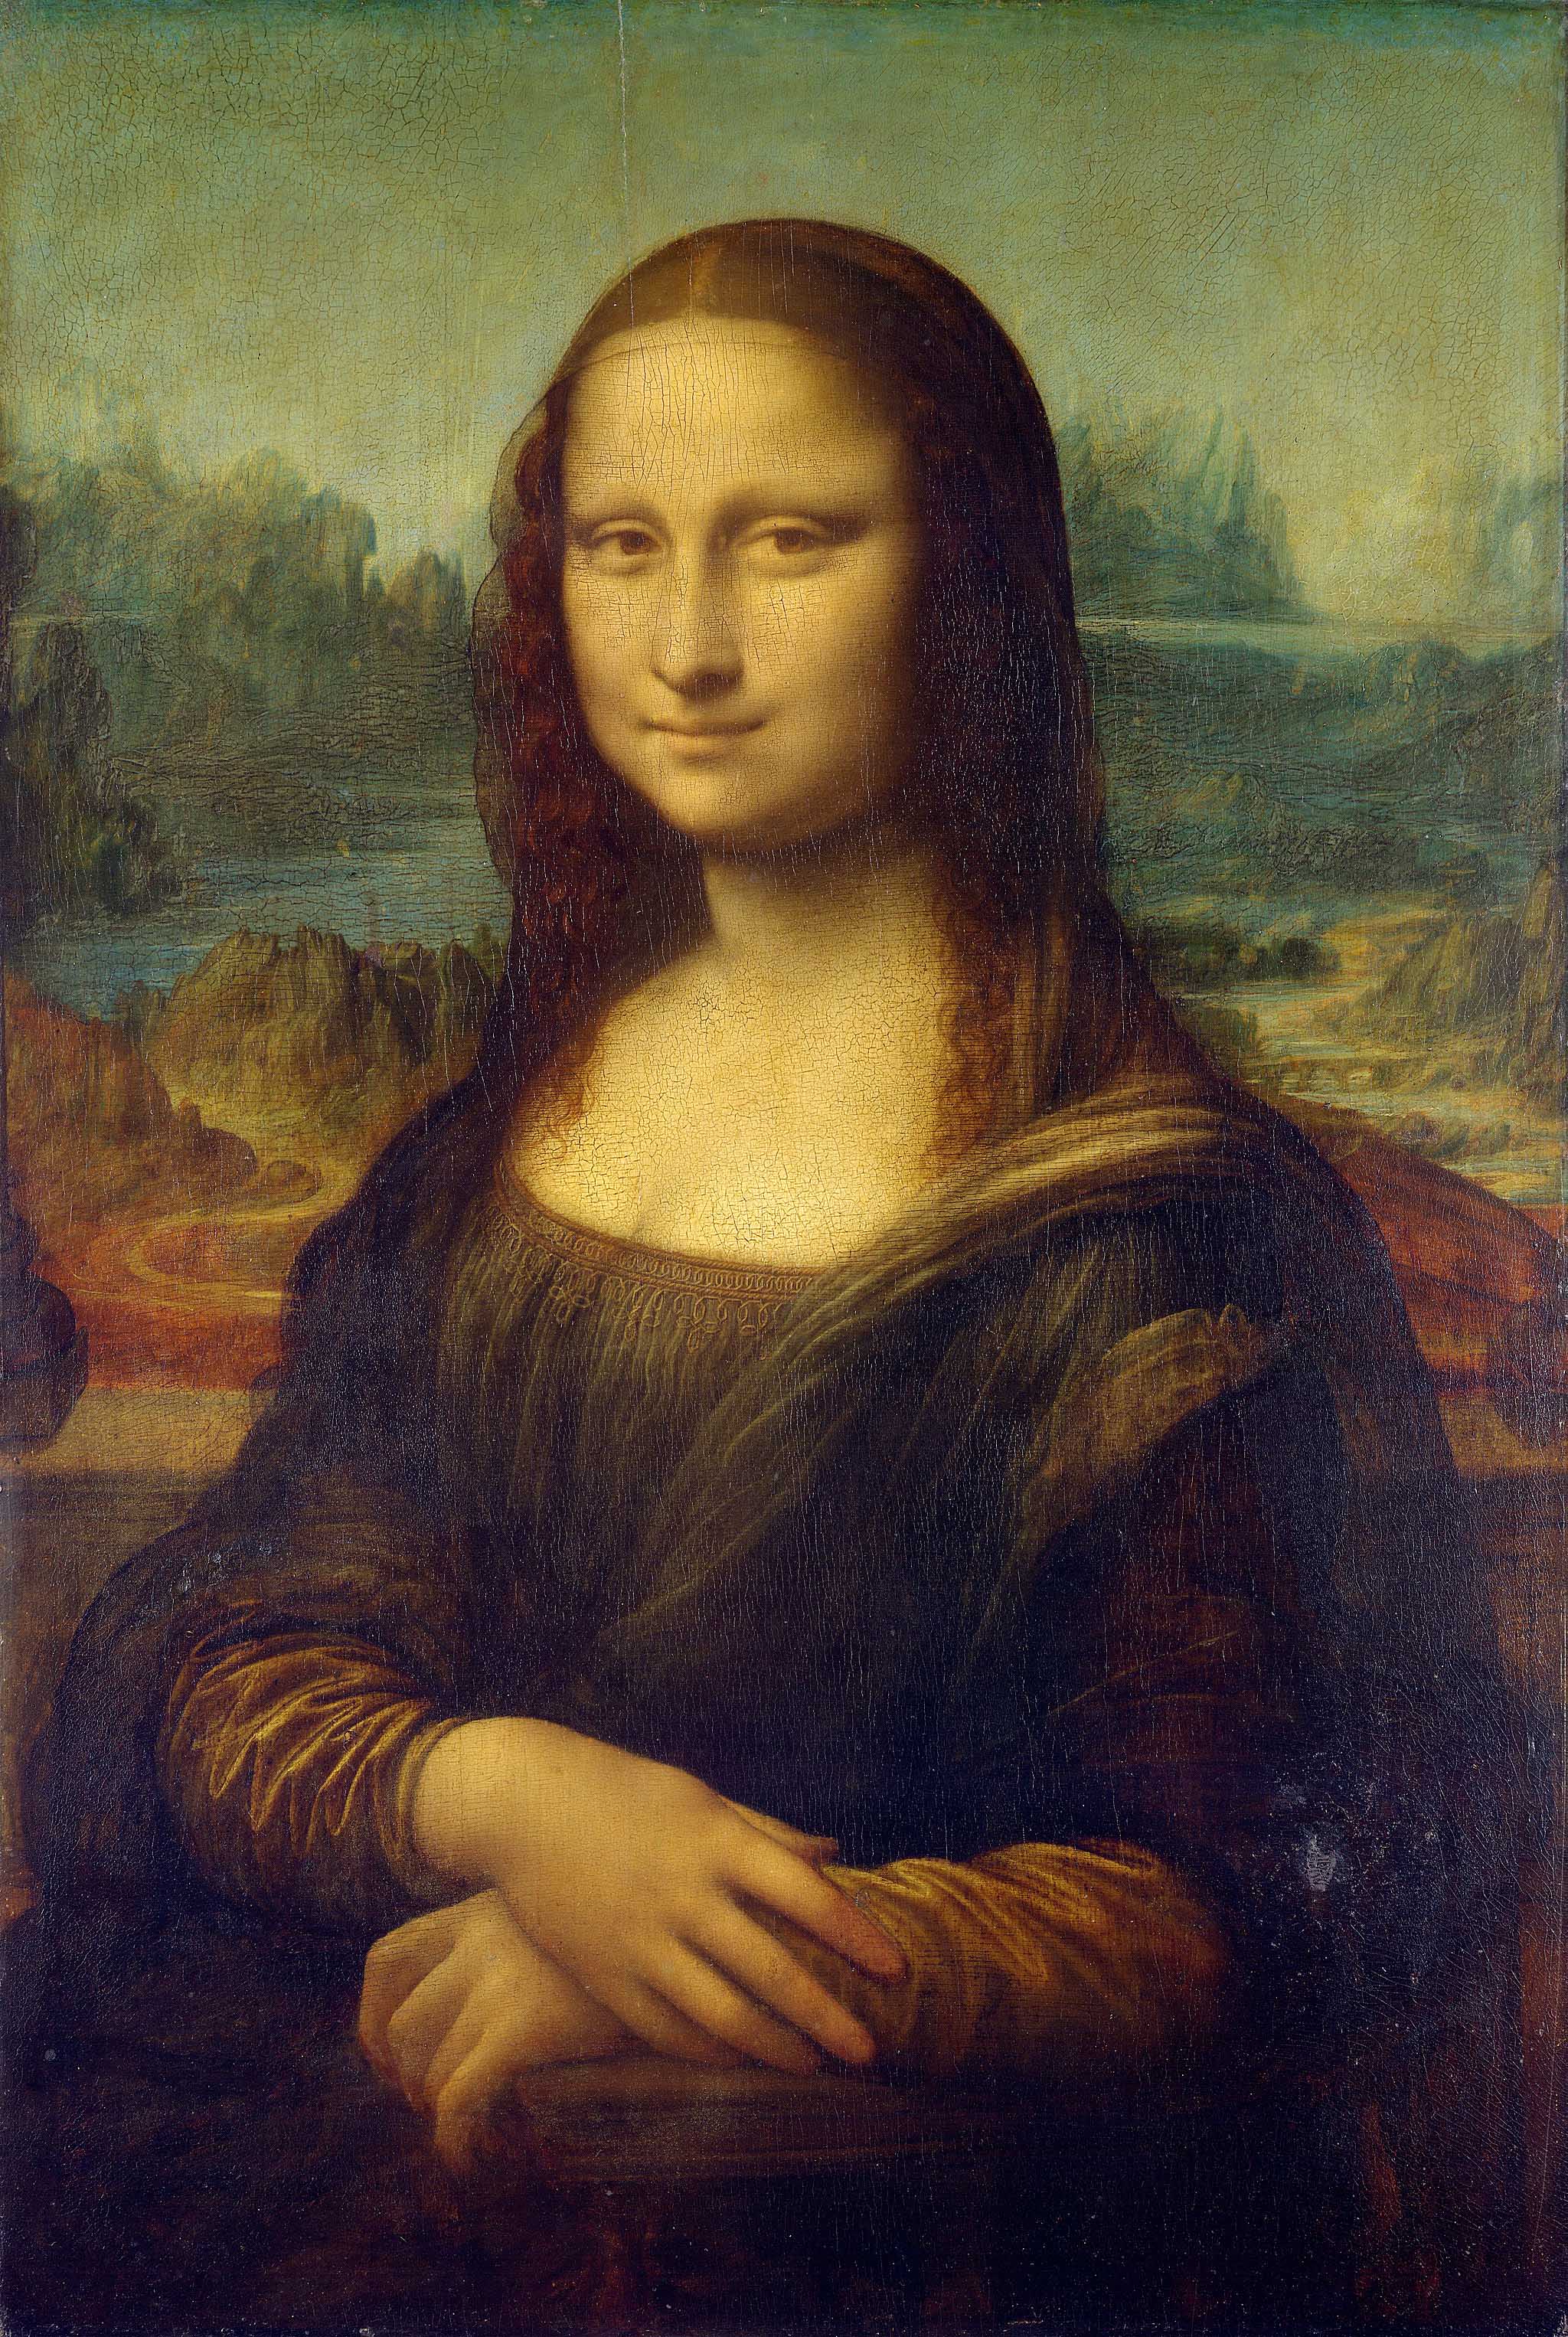 1.Mona Lisa by Leonardo da Vinci from C2RMF retouched